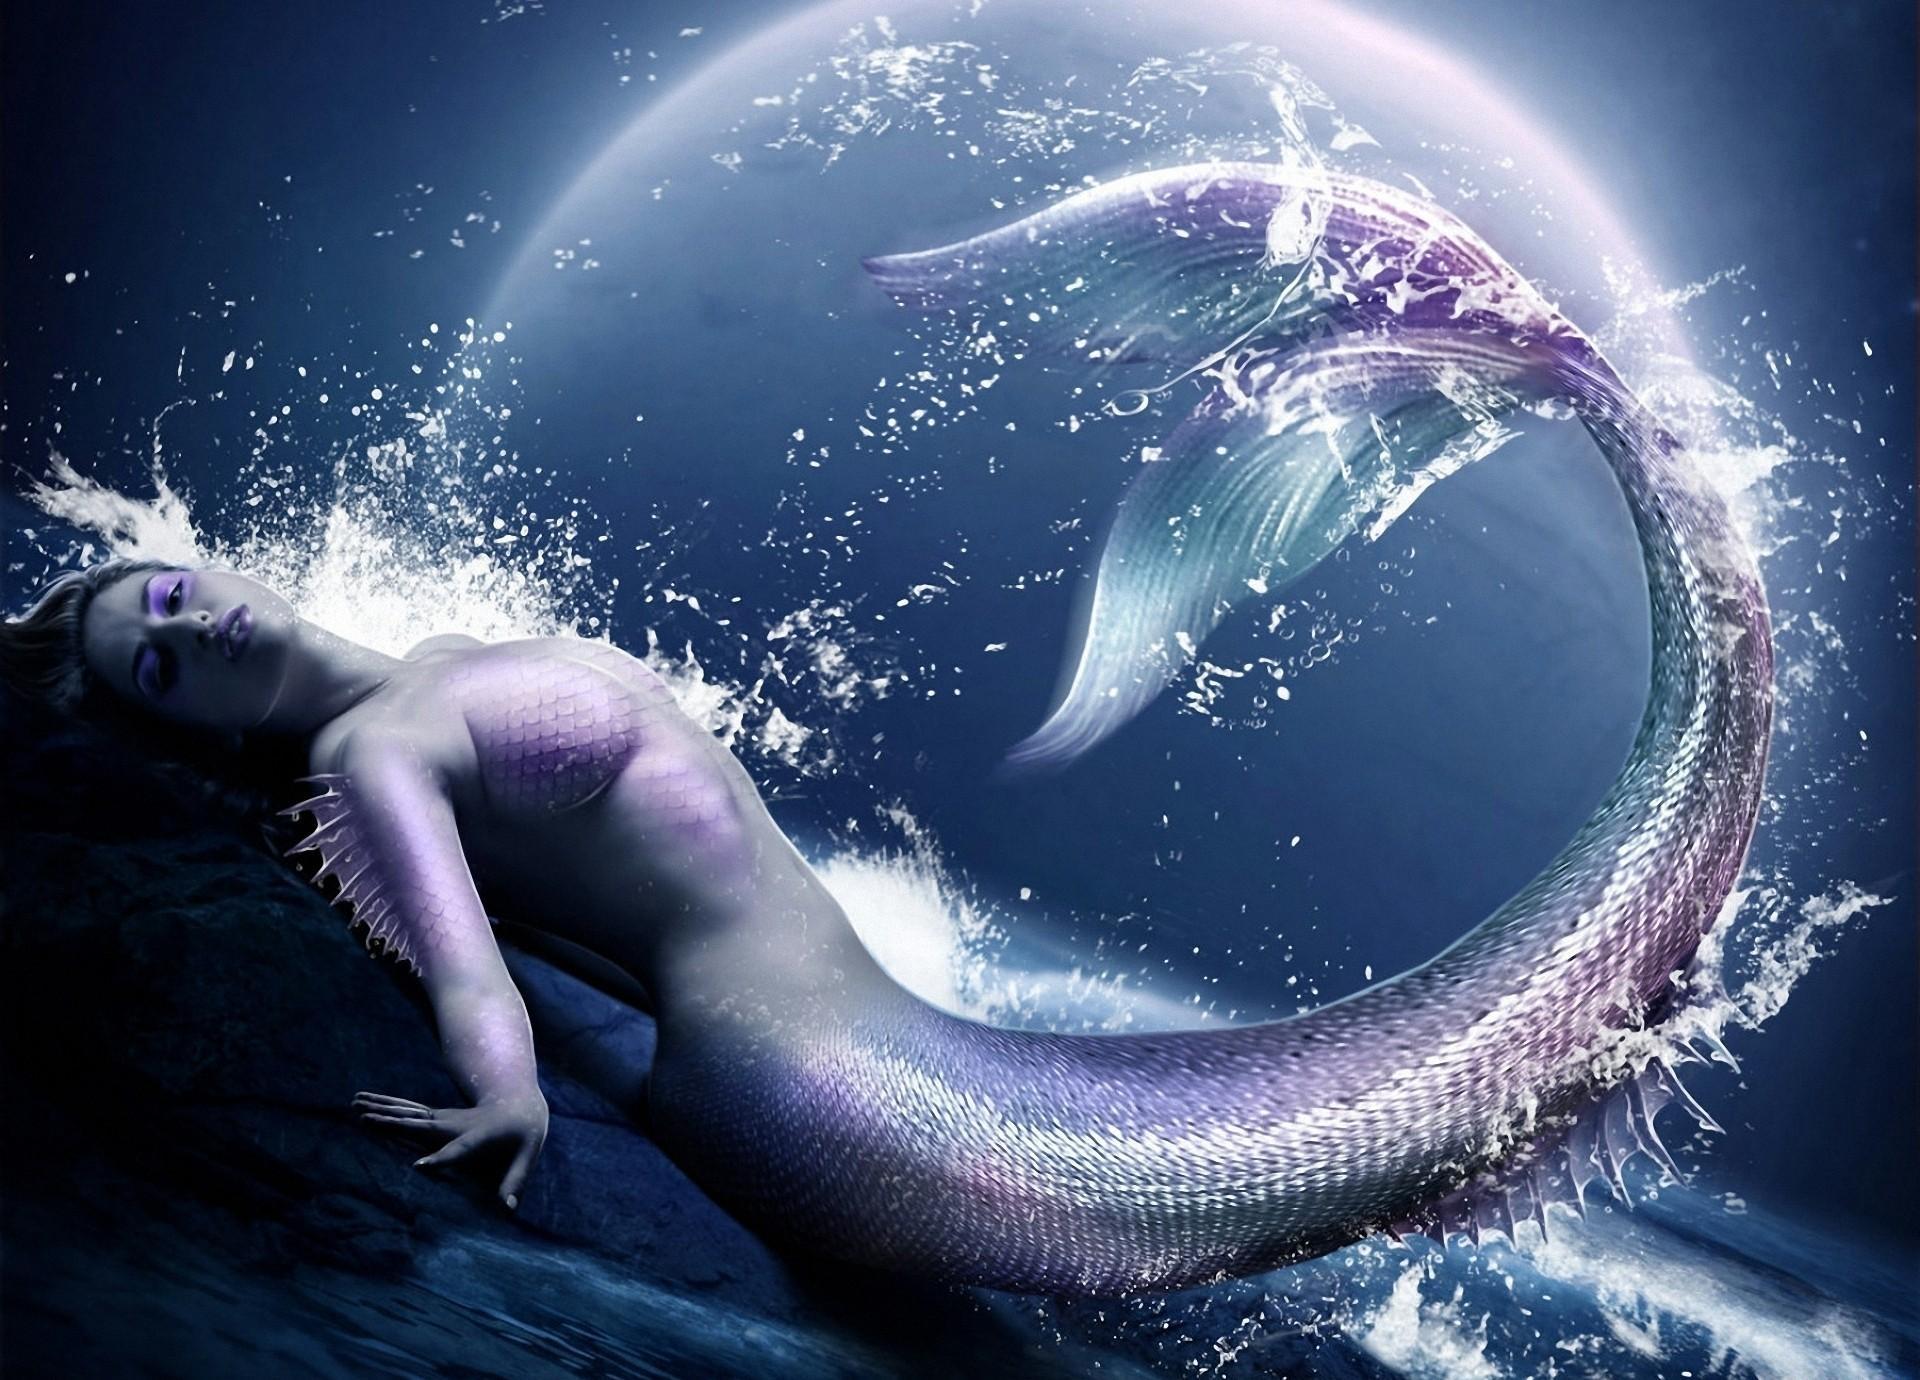 Most Beautiful Mermaid Wallpaper Full HD Pictures